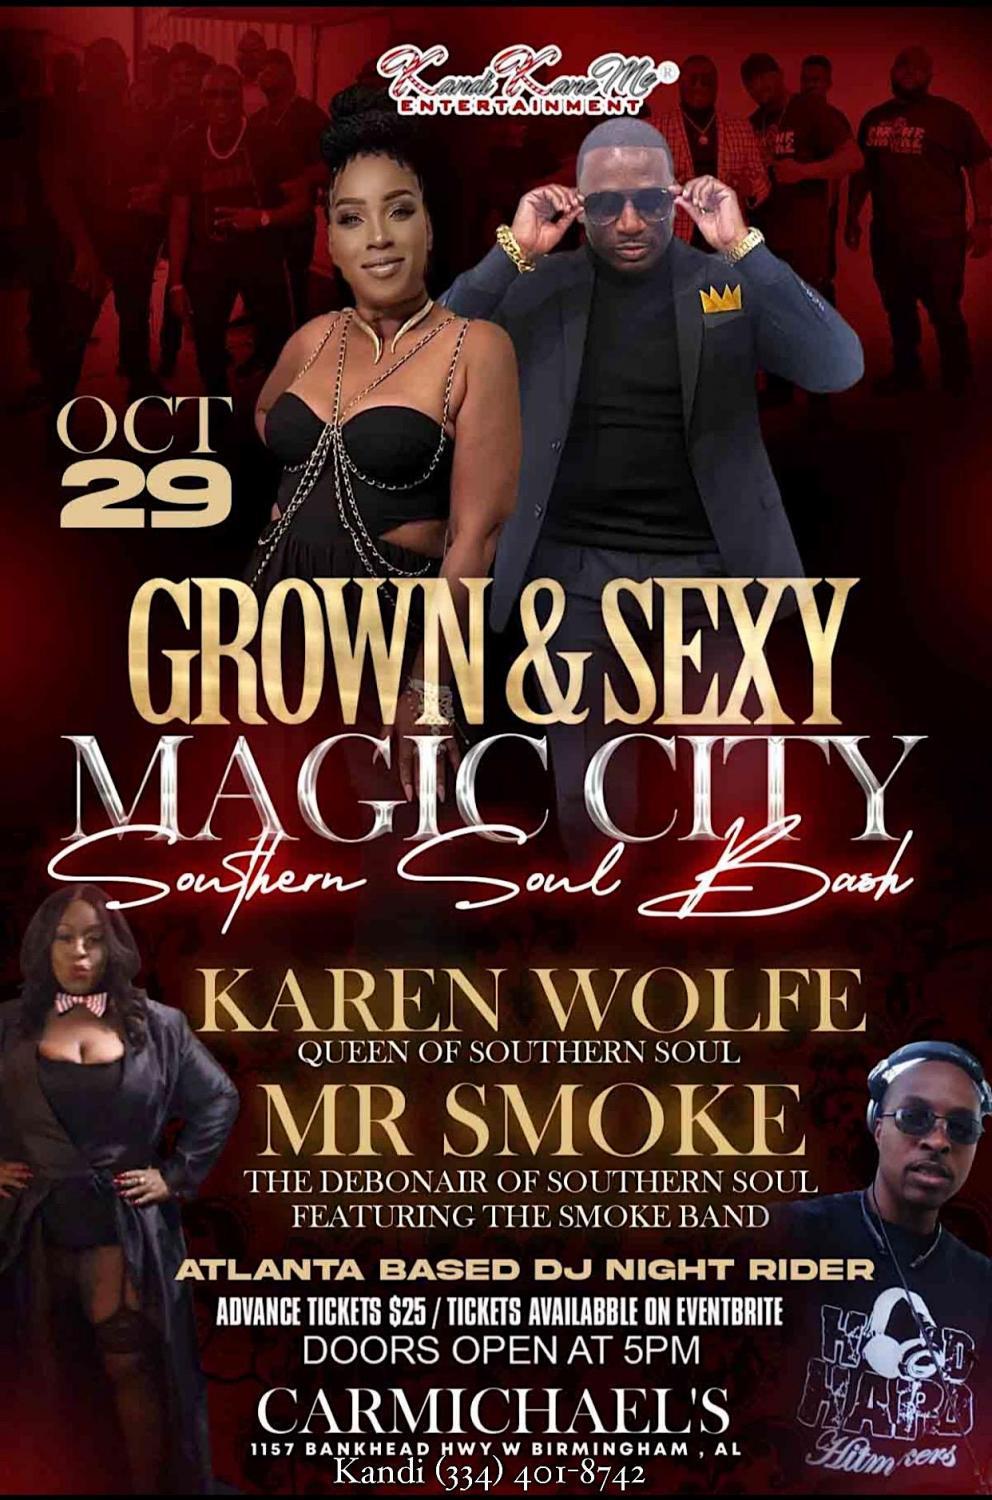 Magic City Southern Soul Bash starring KAREN WOLFE & MR. SMOKE Smoke Band
Sat Oct 29, 5:00 PM - Sun Oct 30, 2:00 AM
in 12 days